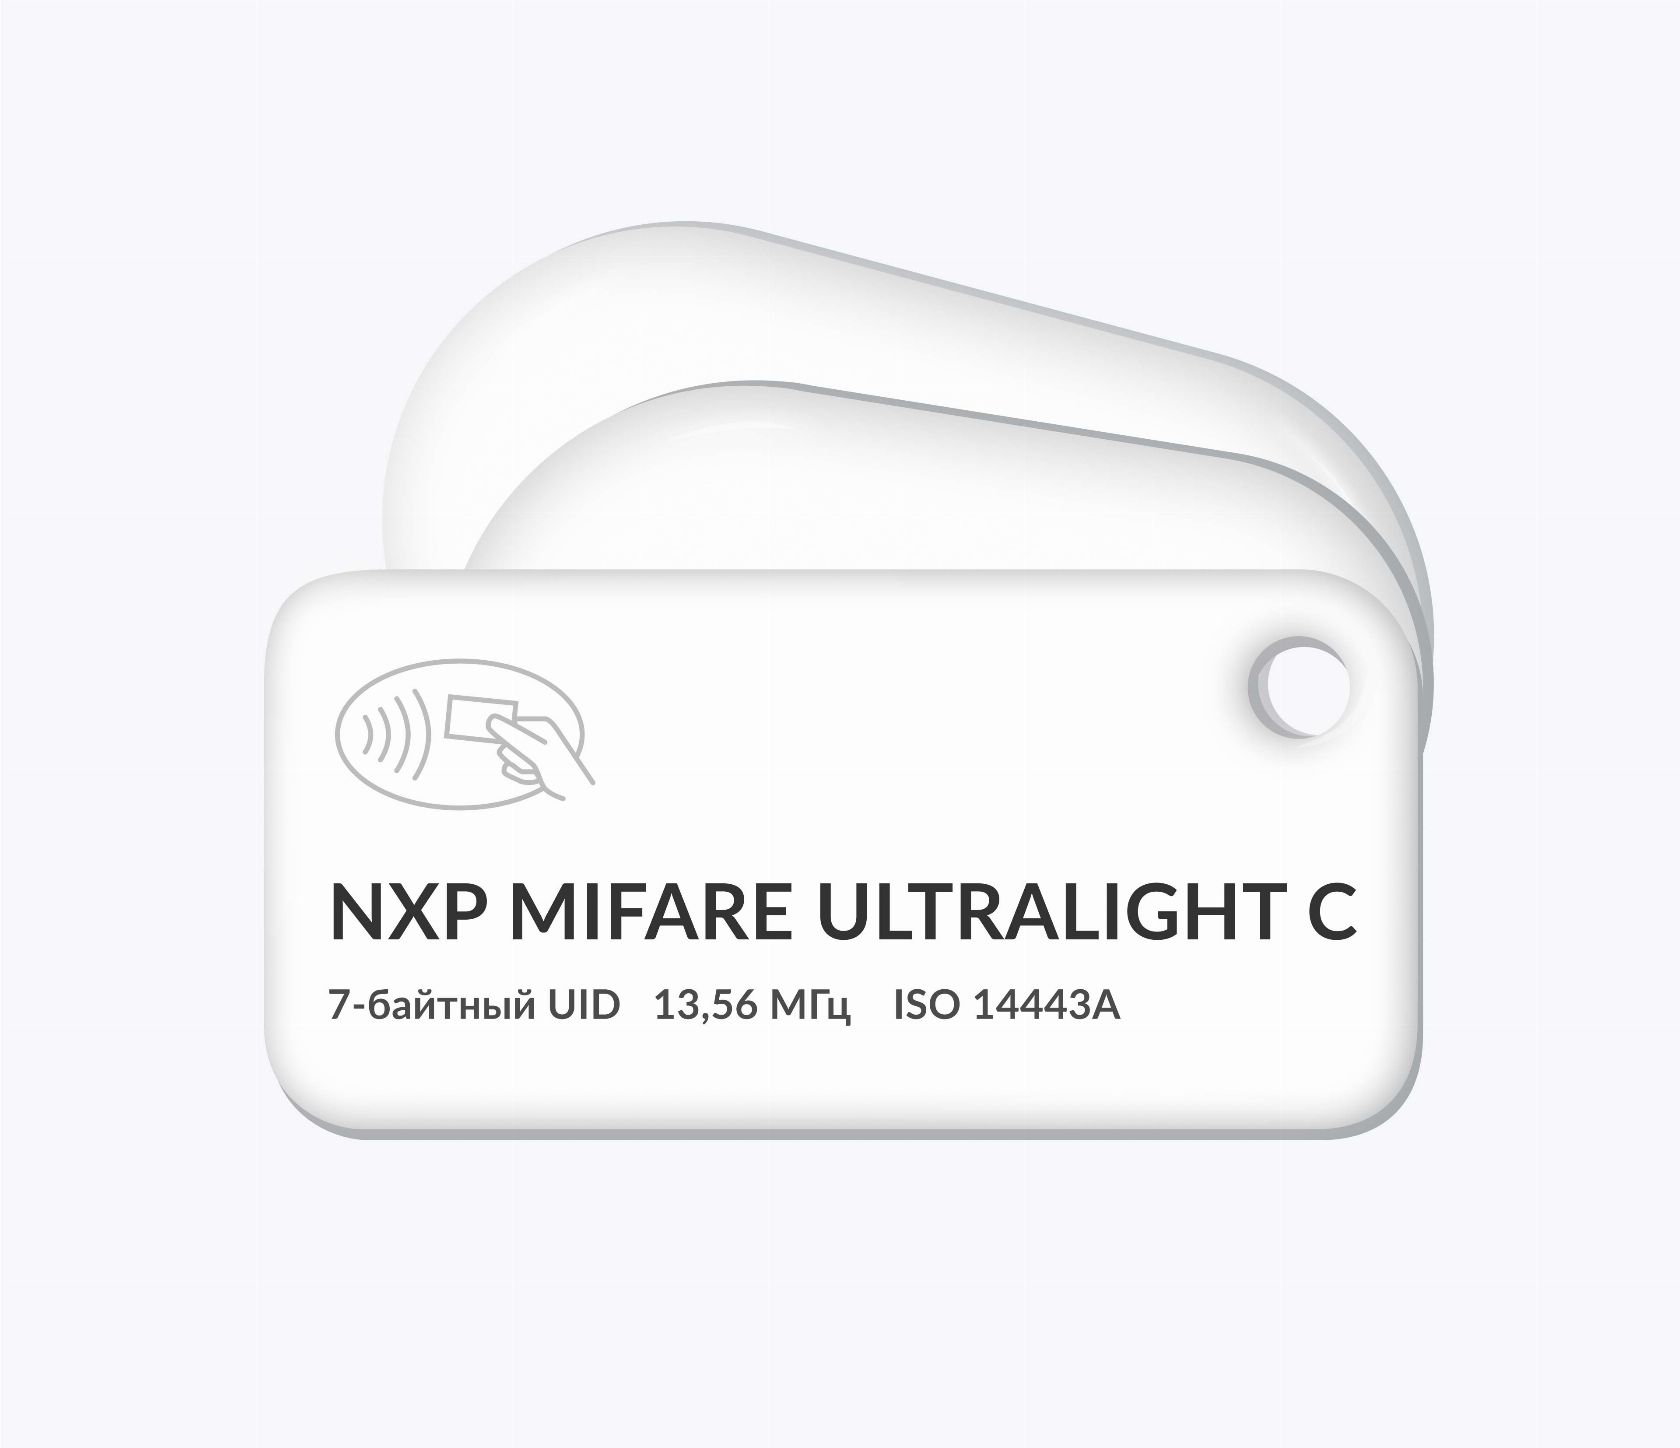 RFID-брелоки NEOKEY® с чипом NXP MIFARE Ultralight C 7 byte UID и вашим логотипом RFID-брелоки NEOKEY® с чипом NXP MIFARE Ultralight C 7 byte UID и вашим логотипом